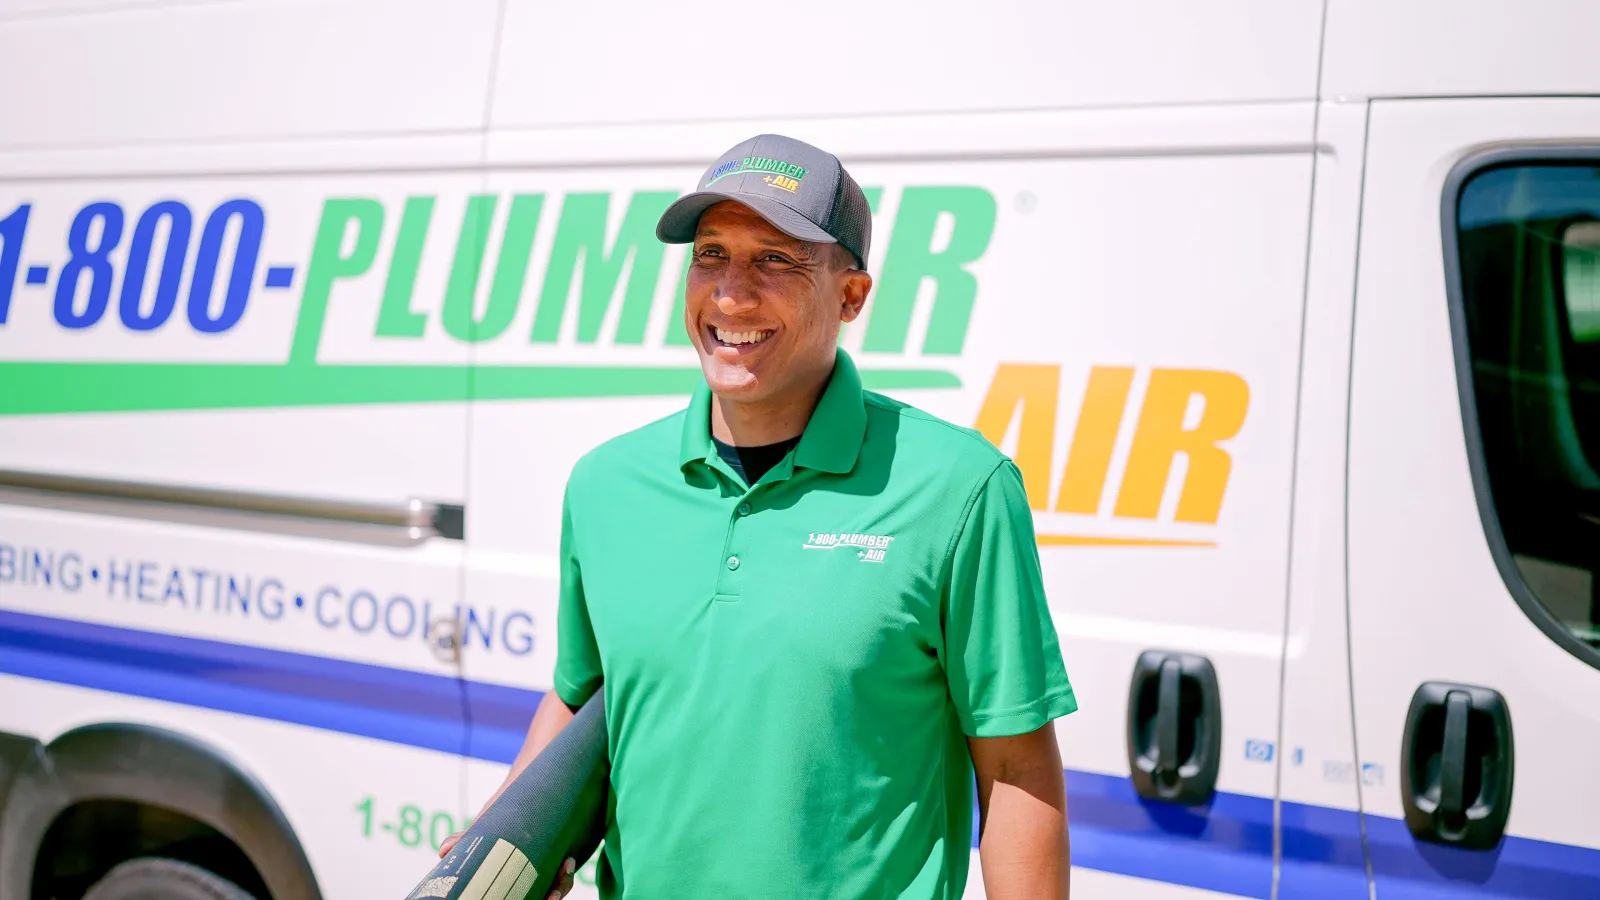 A 1-800-Plumber +Air of Monterrey plumber and van